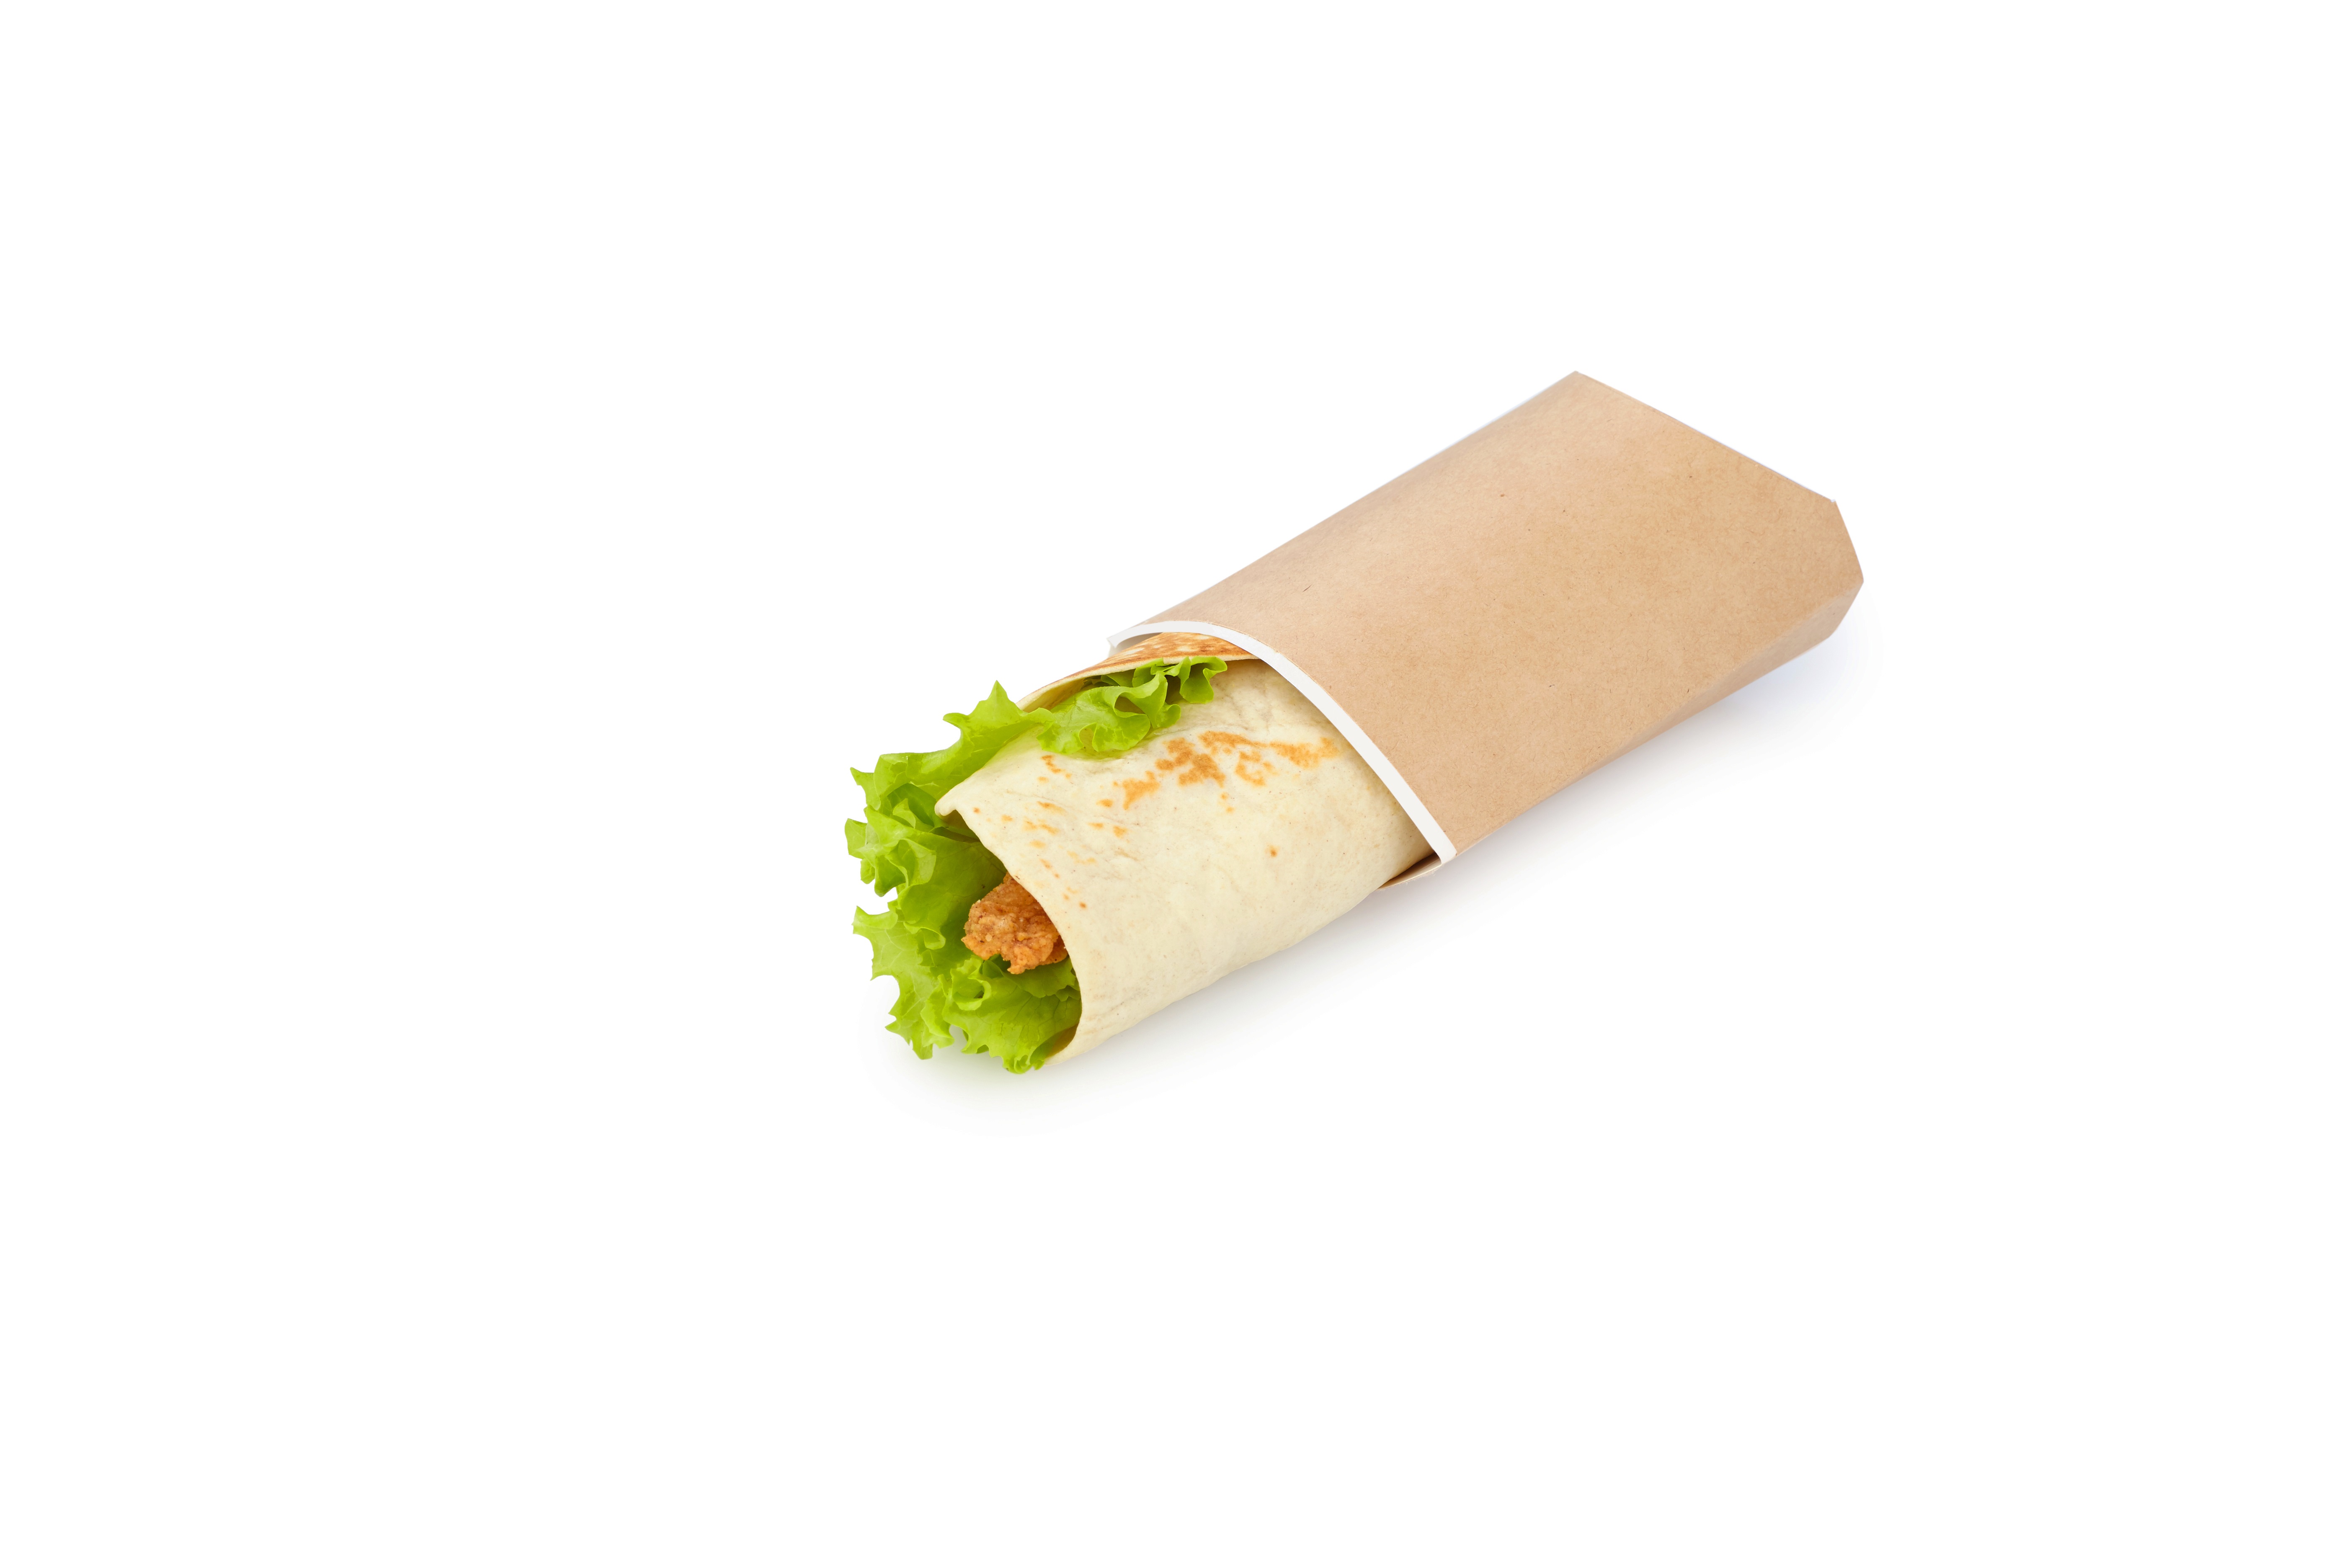 OSQ PILLOW packaging for rolls